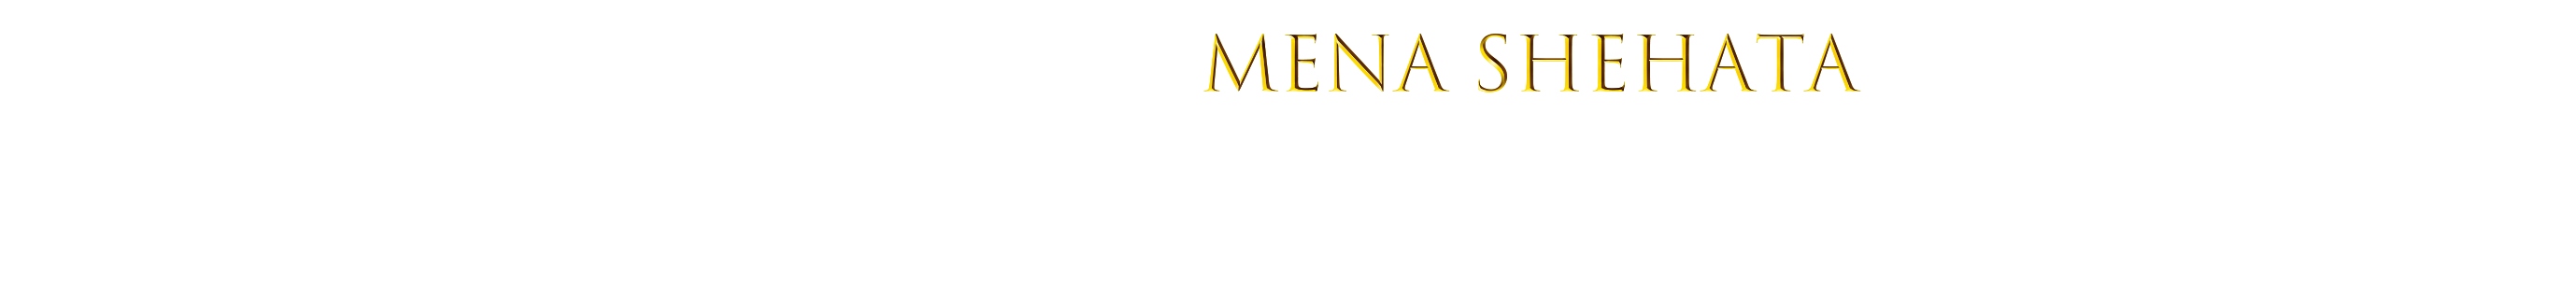 Mena Shehata's profile banner